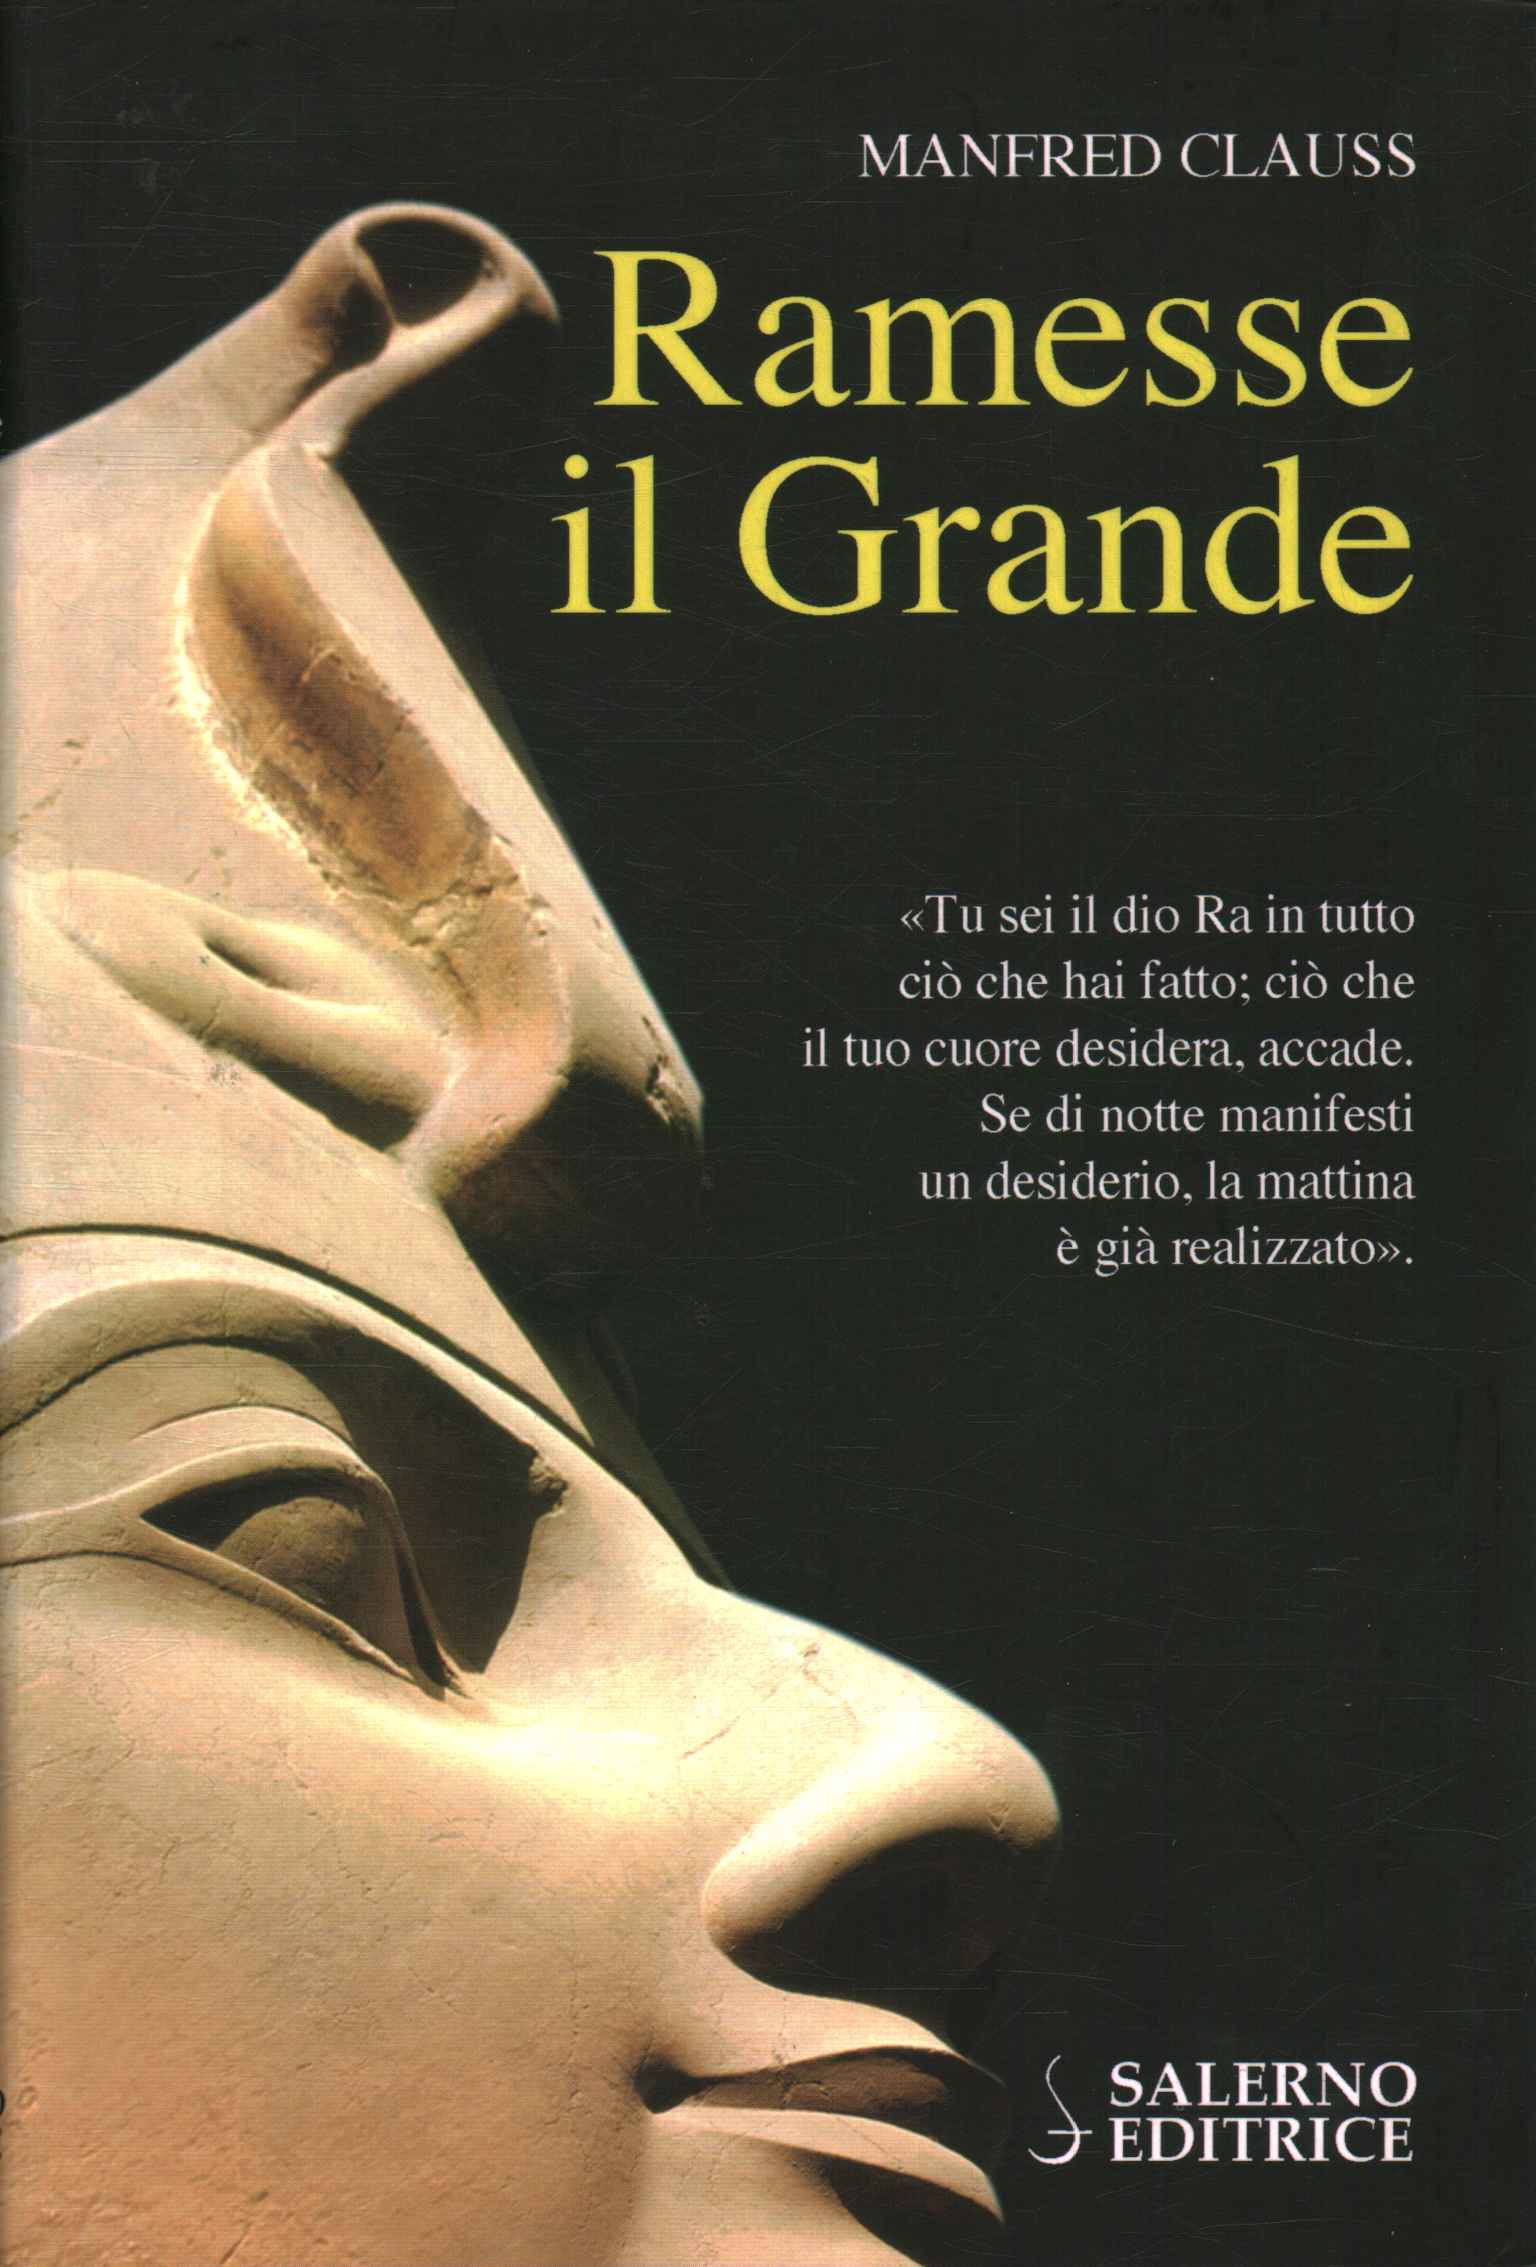 Libri - Storia - Biografie Diari/Memorie,Ramesse il Grande